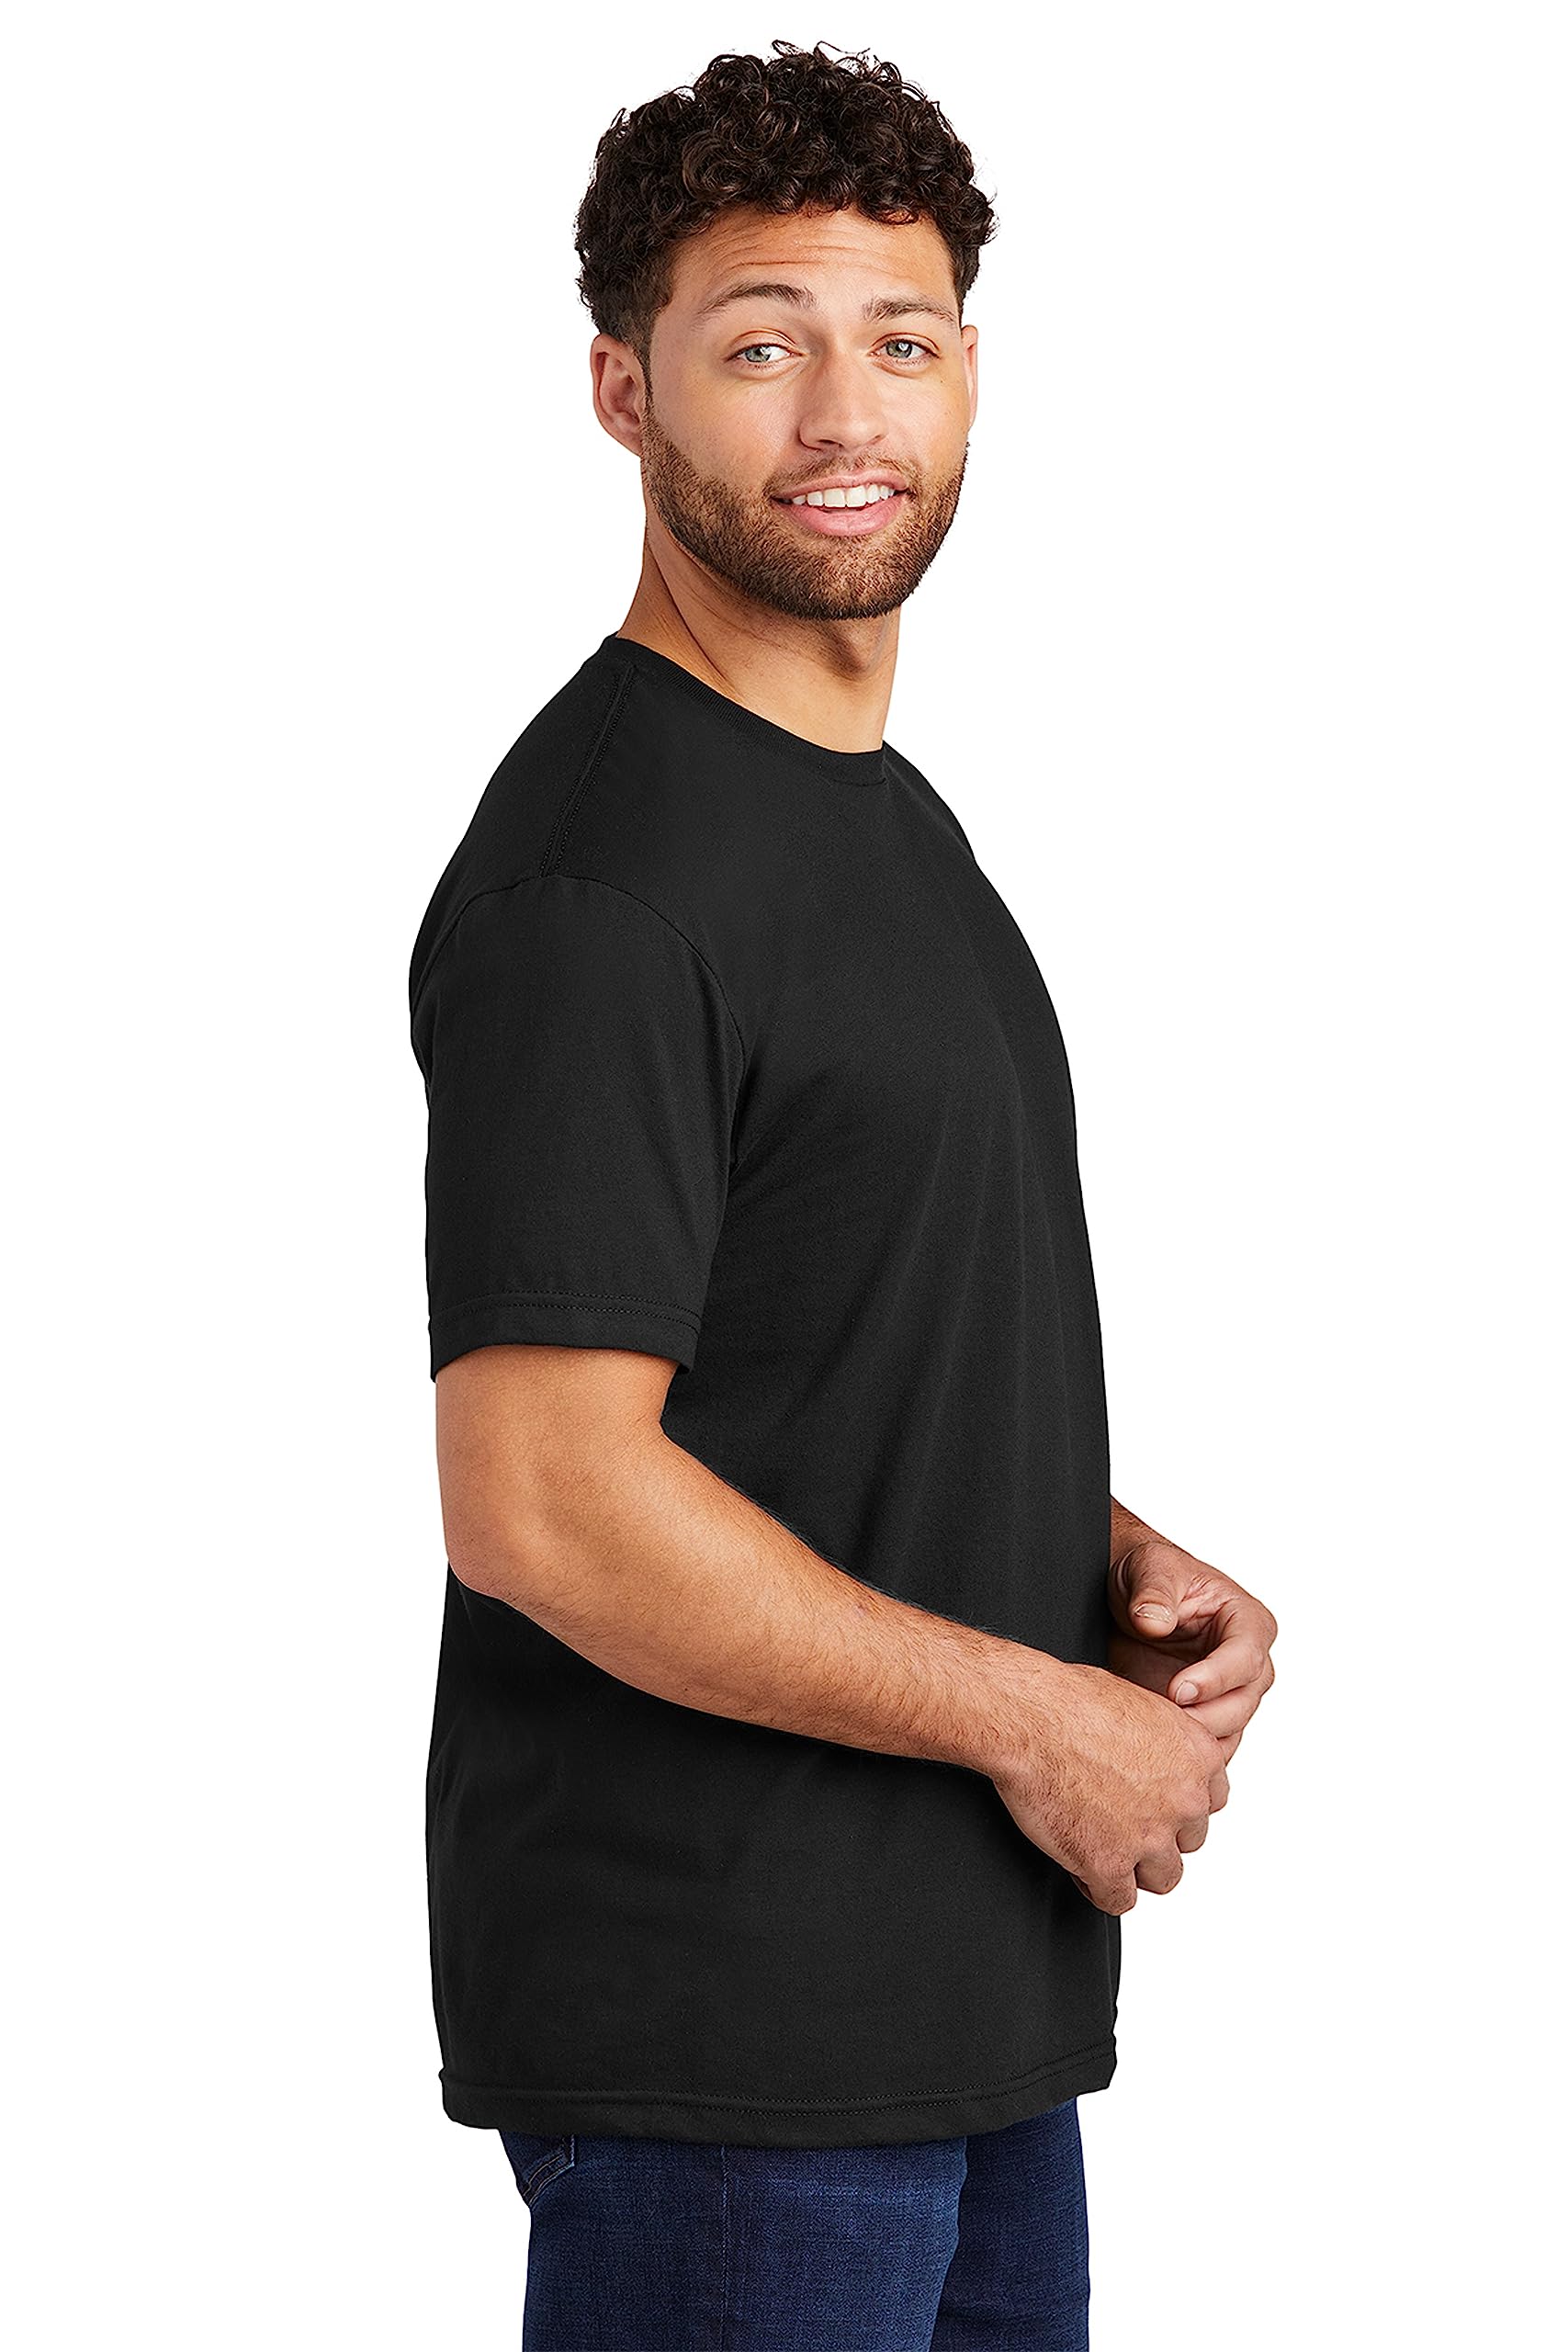 Gildan Men's Crew T-Shirts, Multipack, Style G1100